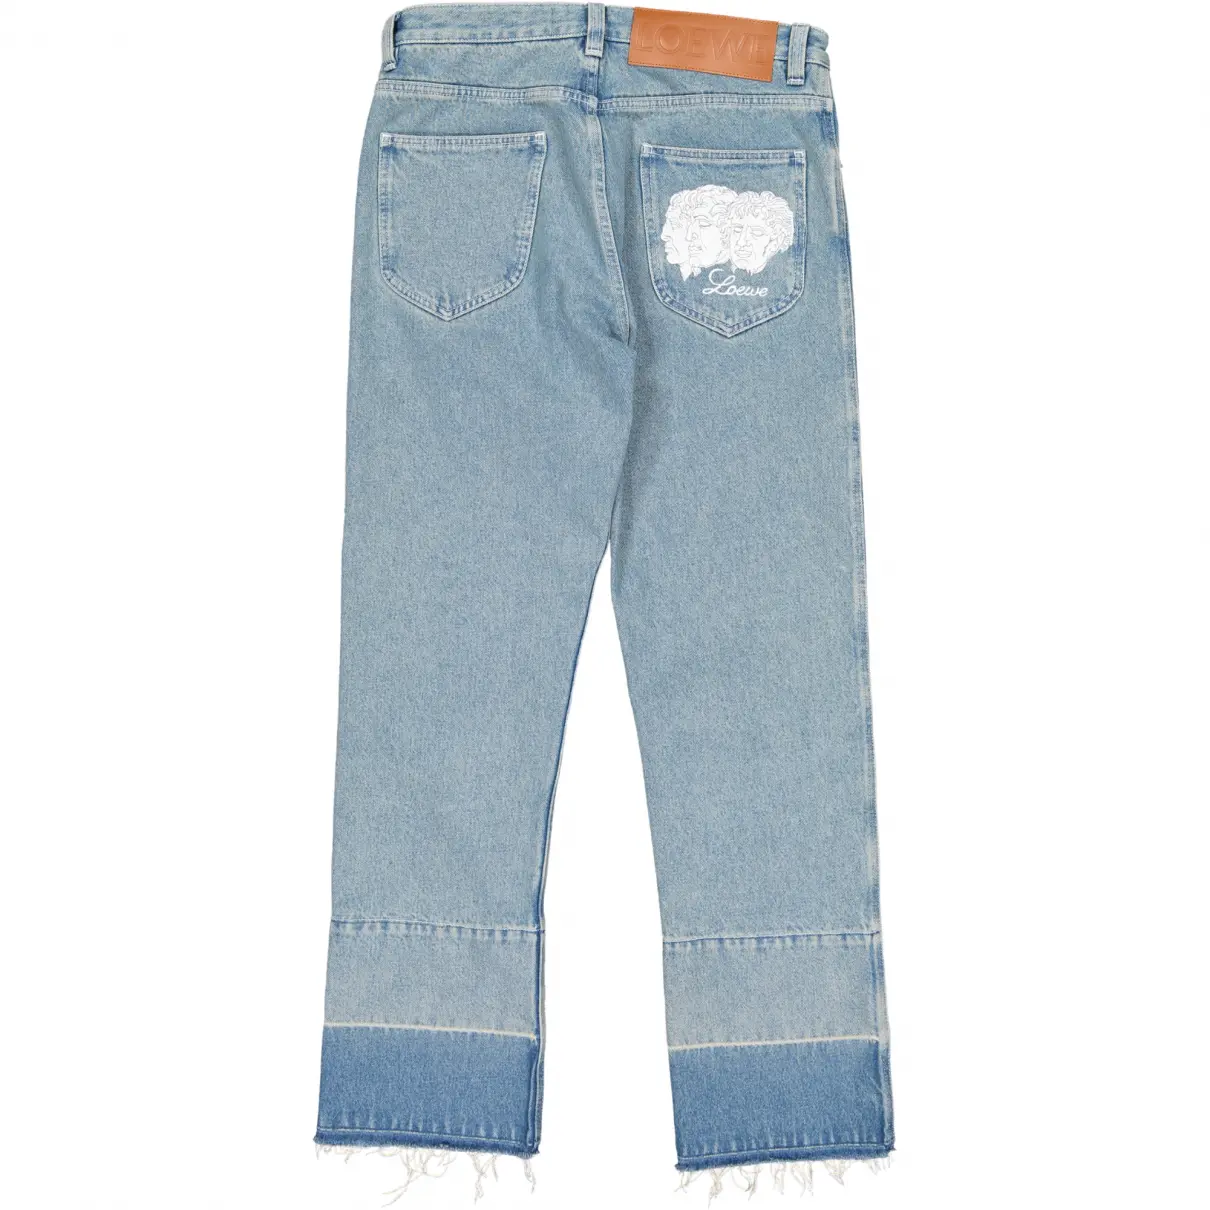 Buy Loewe Boyfriend jeans online